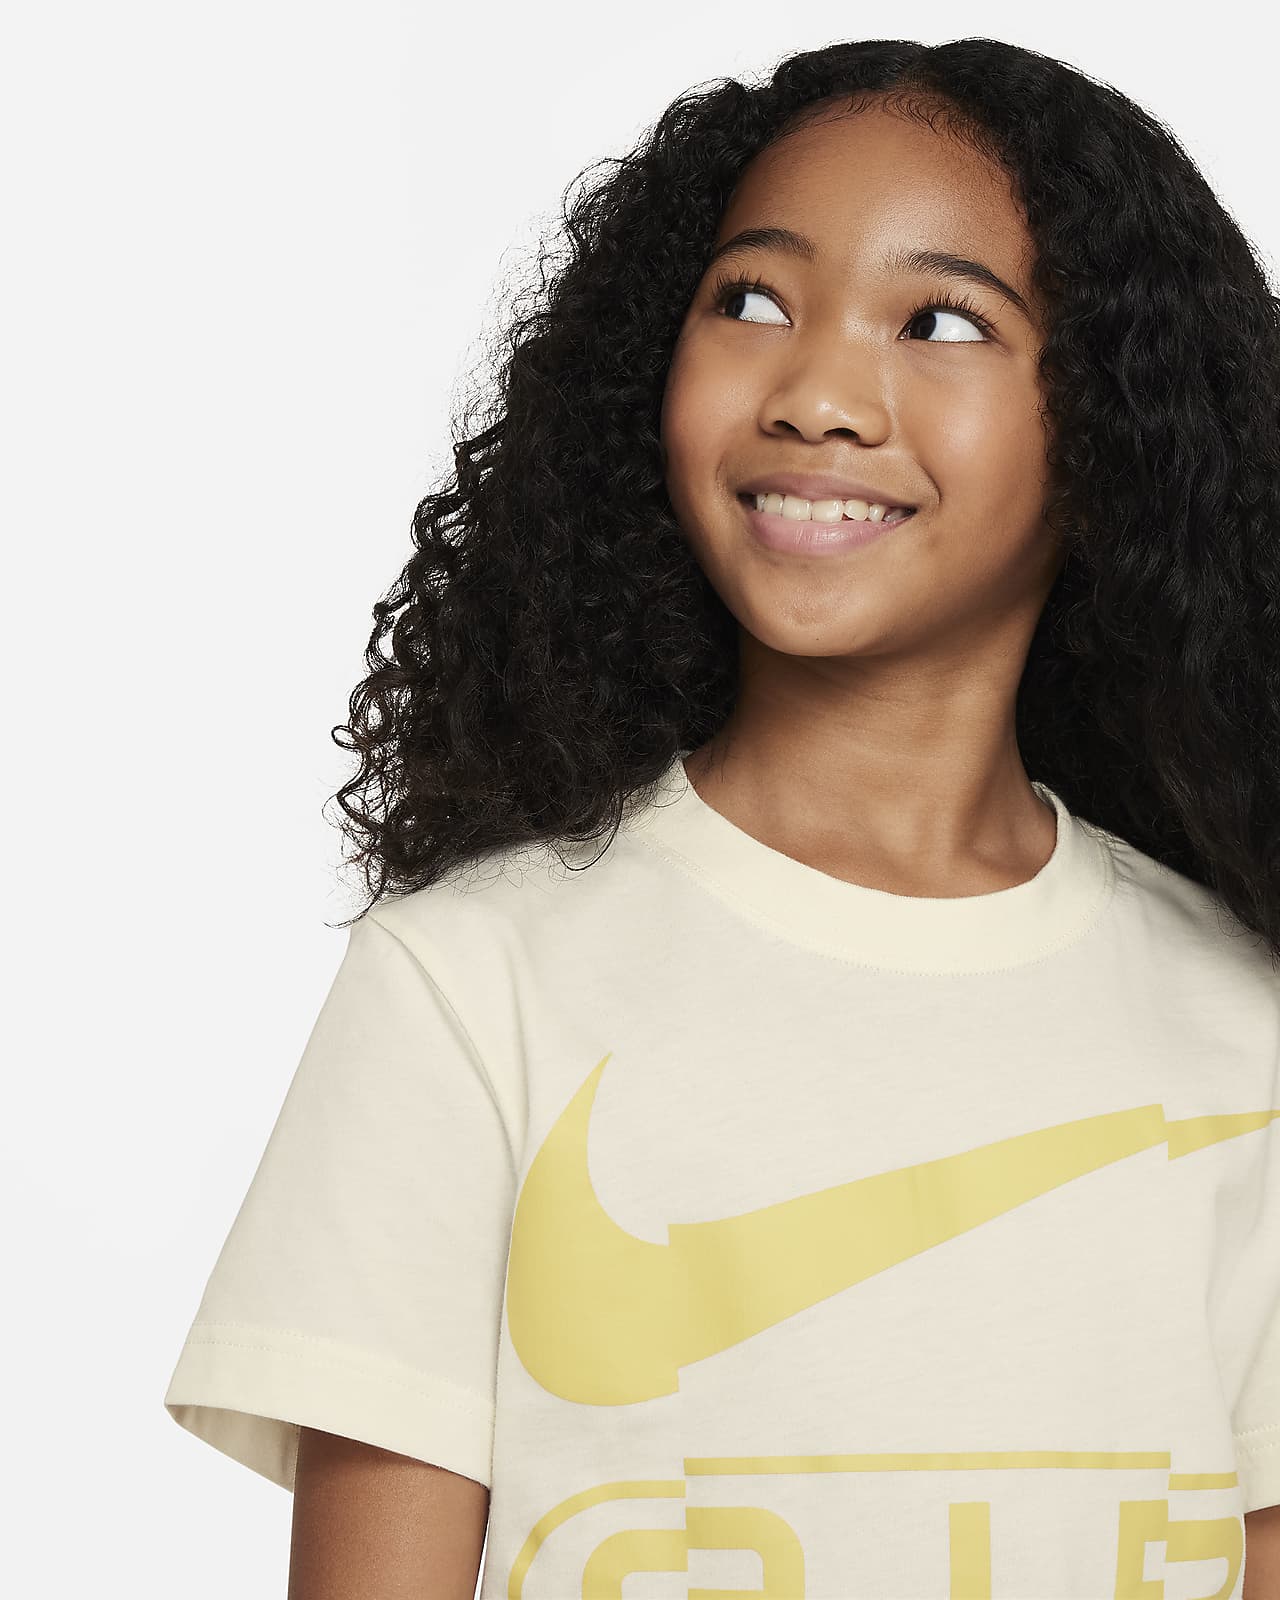  Nike Girl's NSW Air Crop Tee (Little Kids/Big Kids